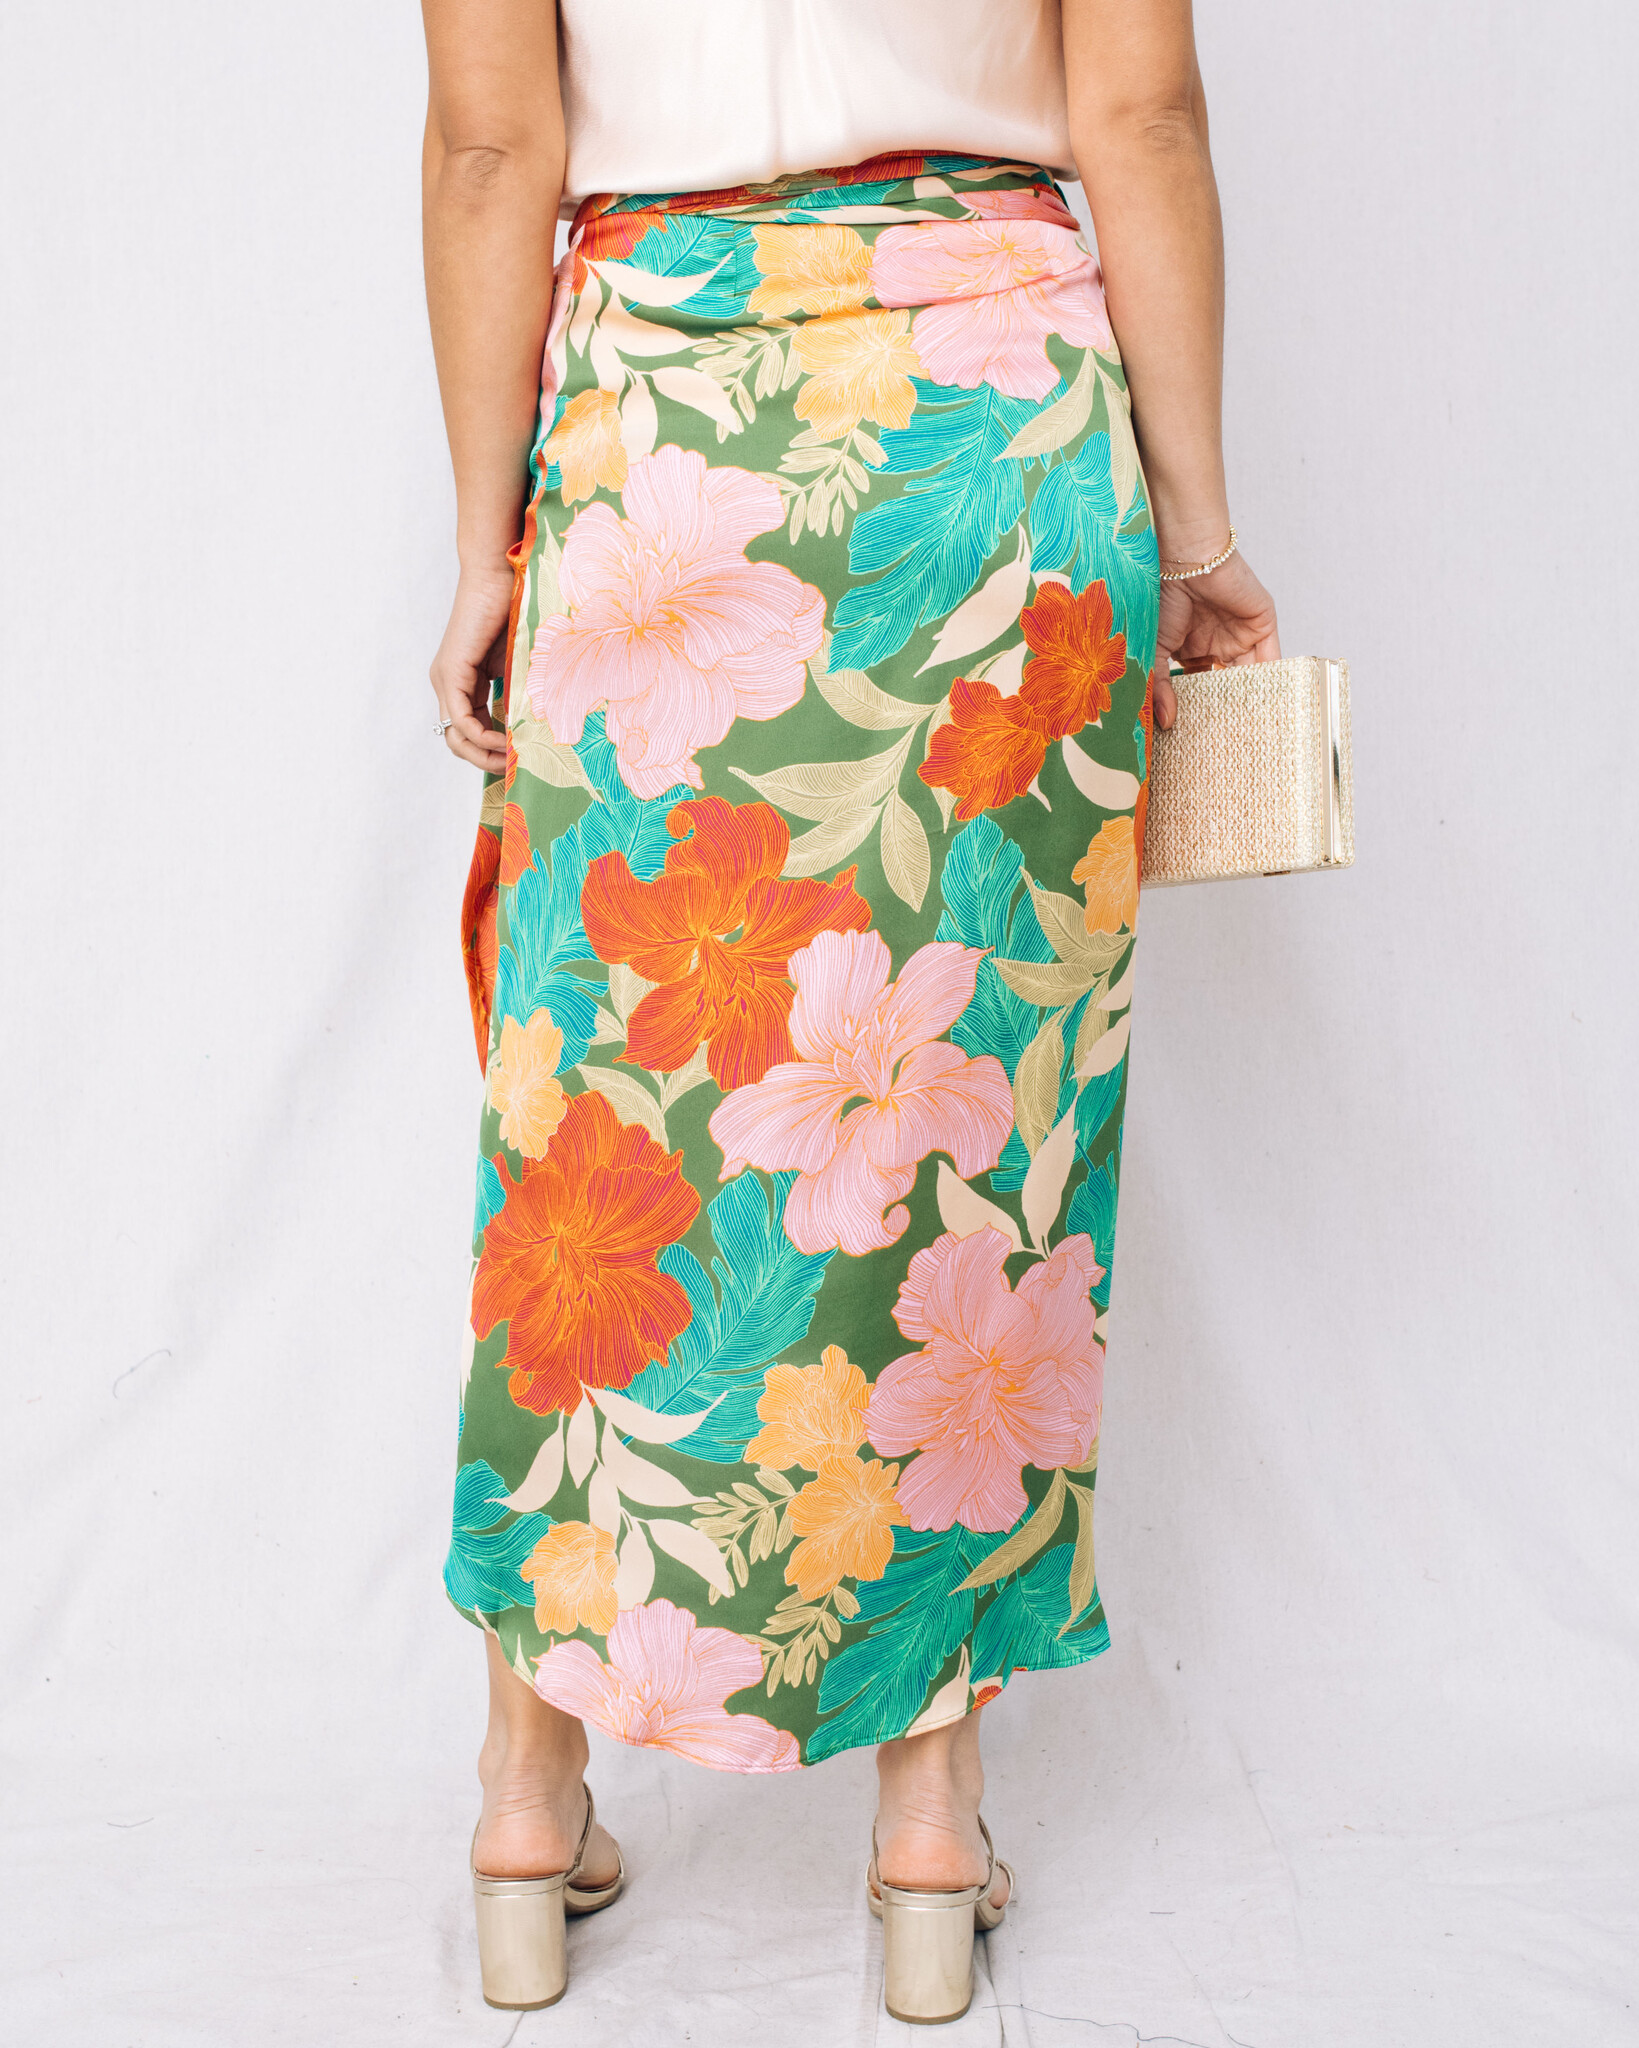 Trendy women's skirts and sarongs